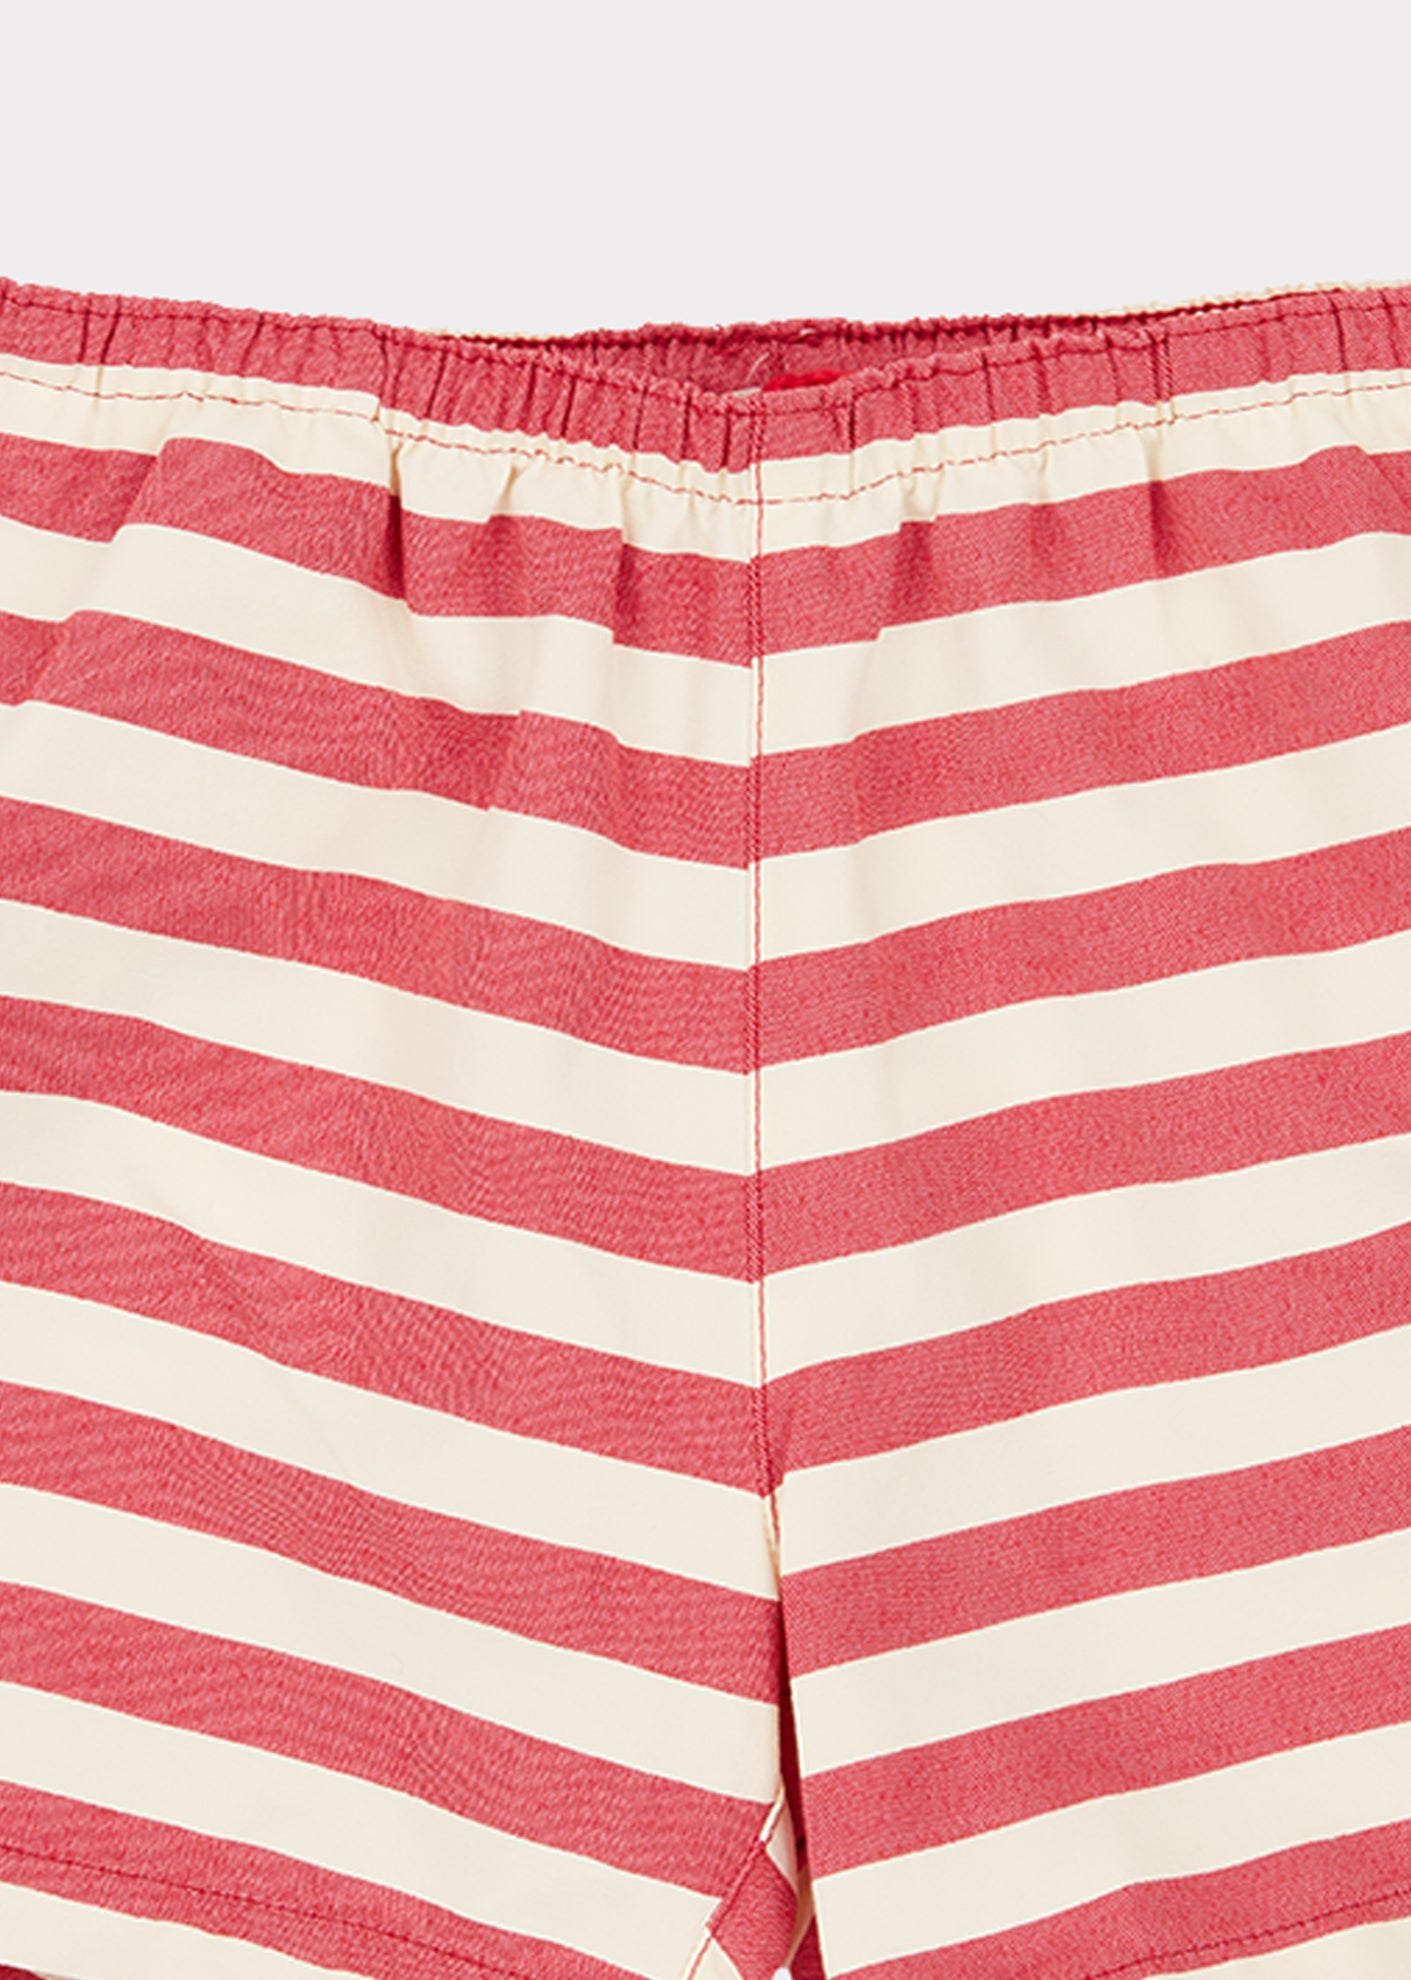 Boys Red Striped Swim Shorts